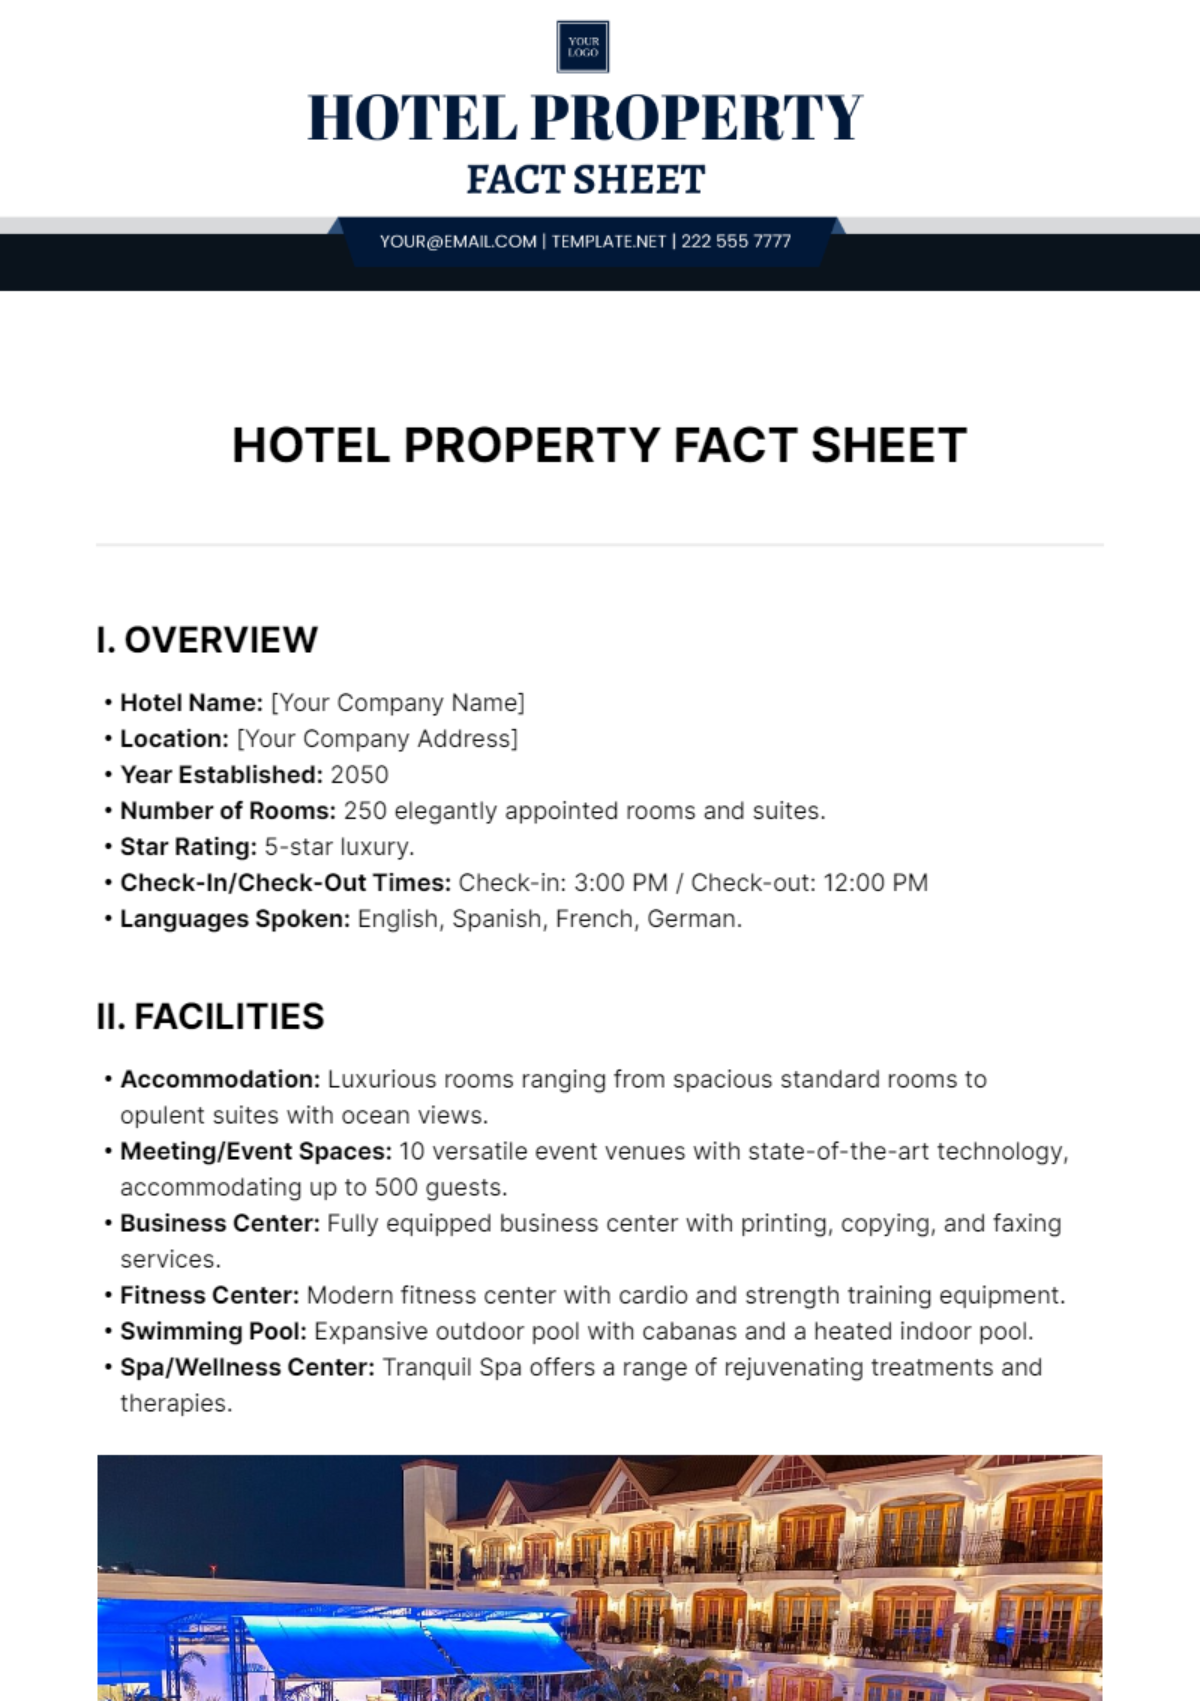 Hotel Property Fact Sheet Template